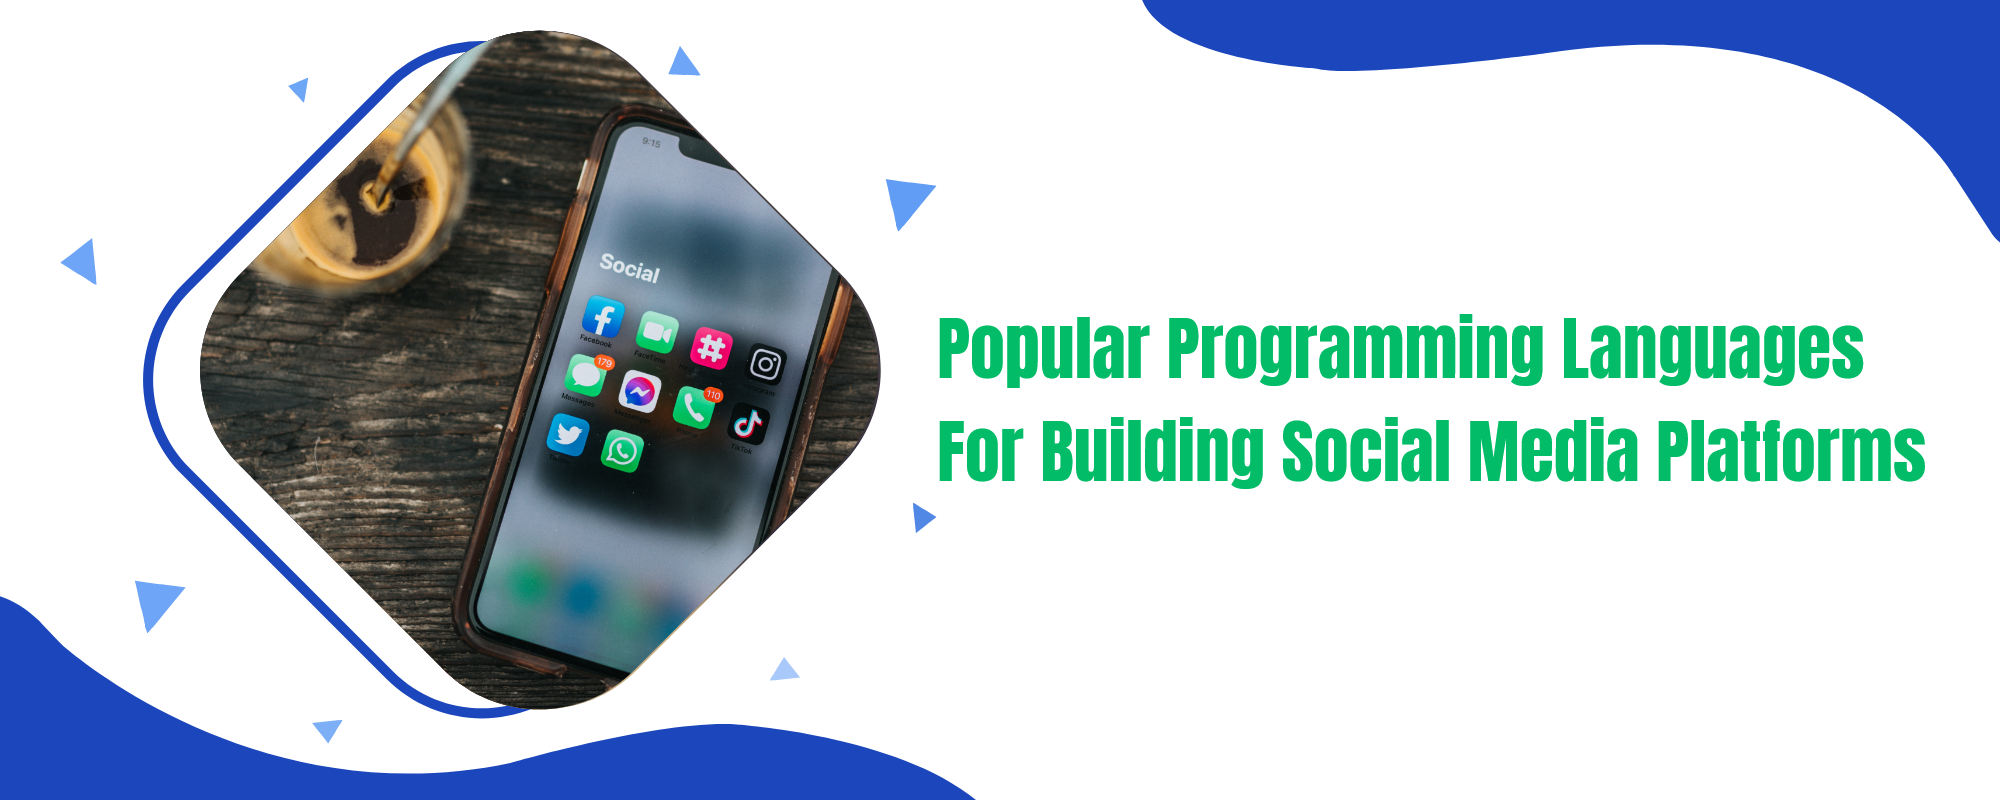 Popular programming languages for building social media platforms